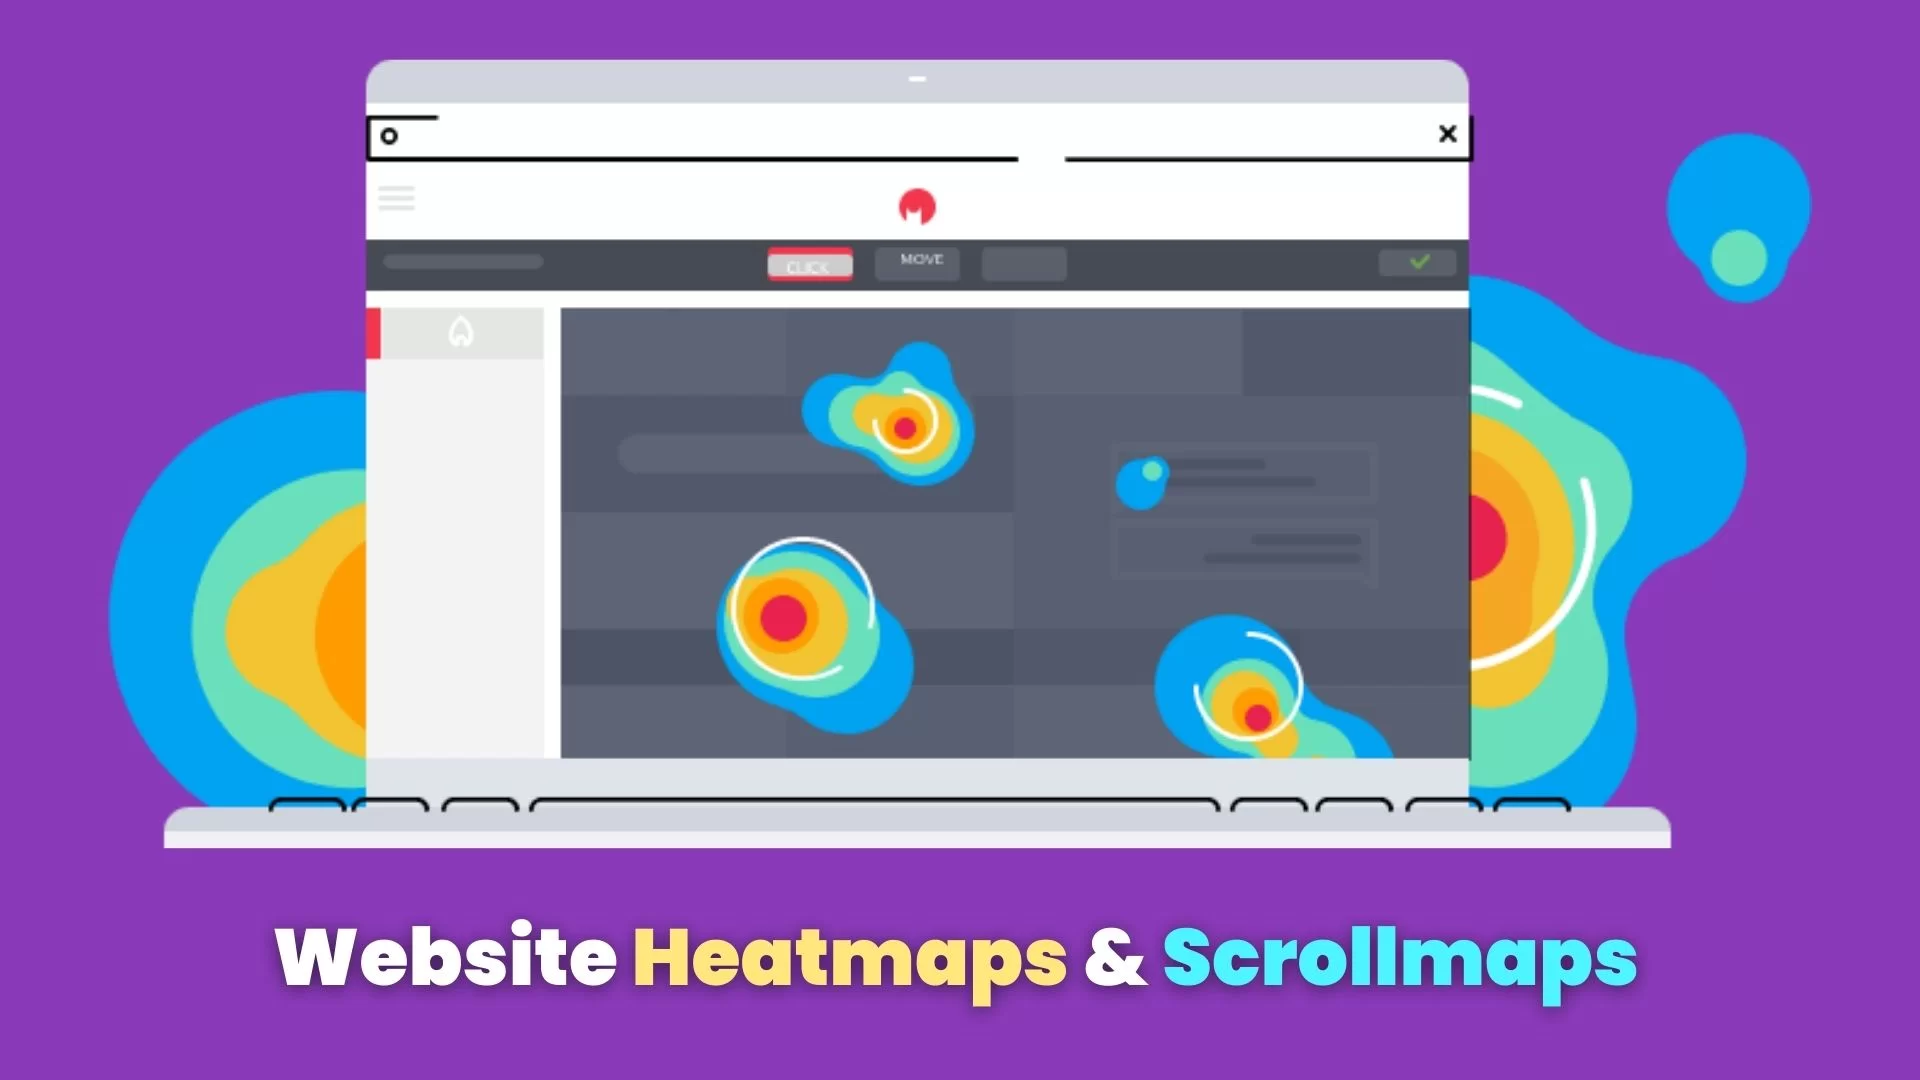 What Are Website Heatmaps?